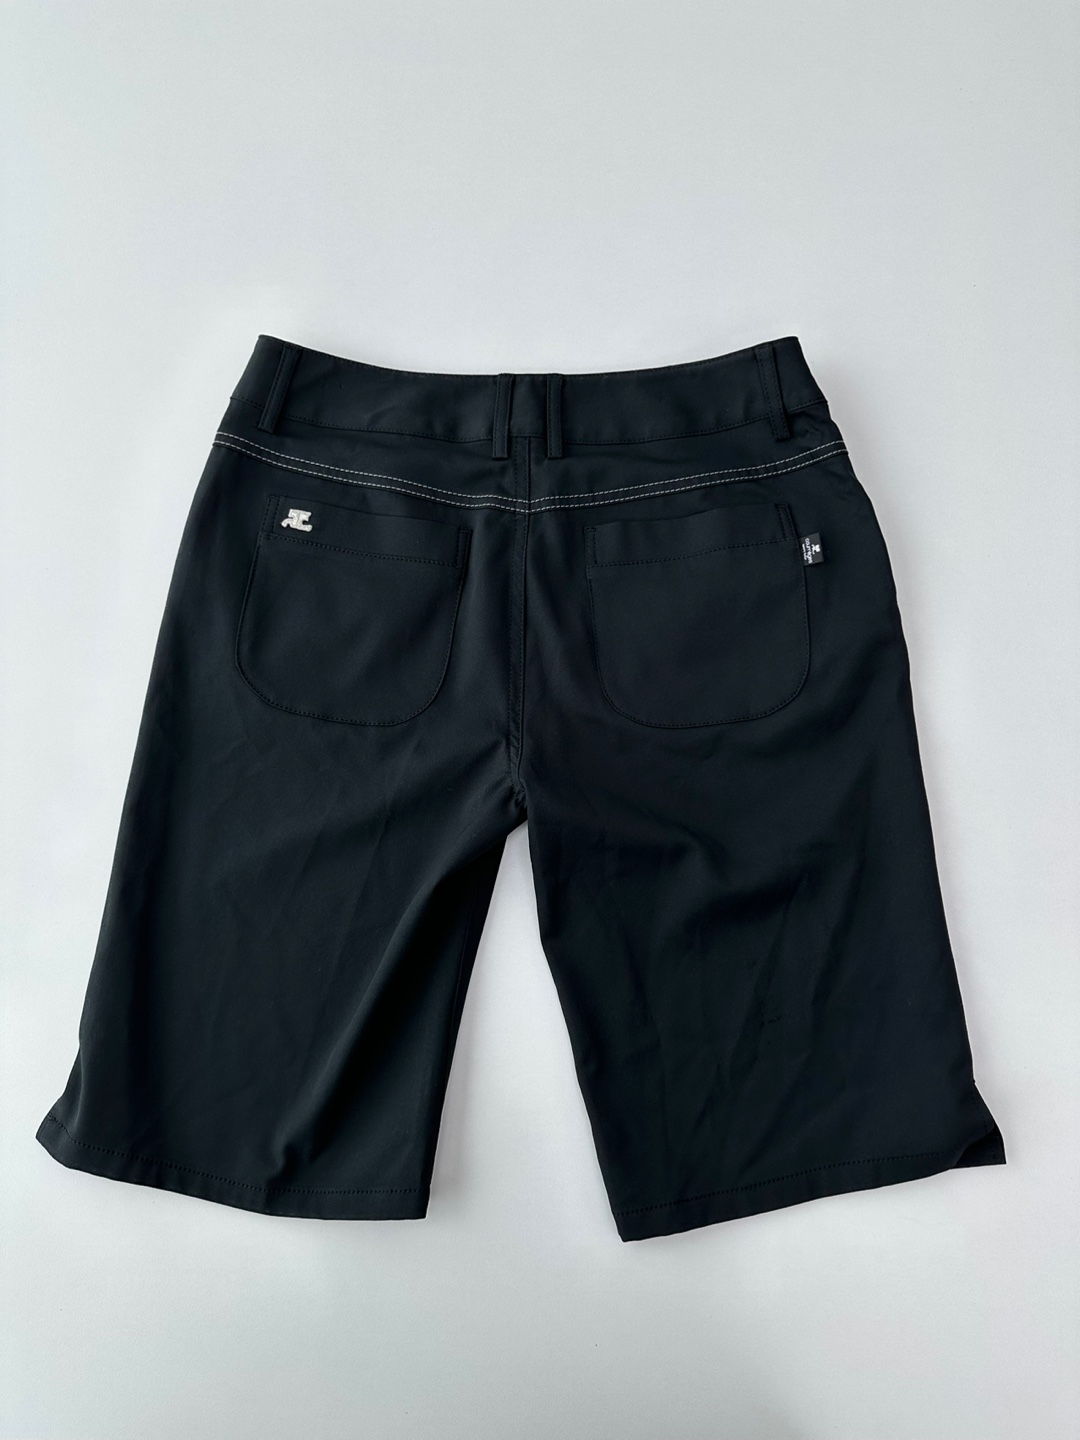 Courrèges Black White Stitching Span Half Pants